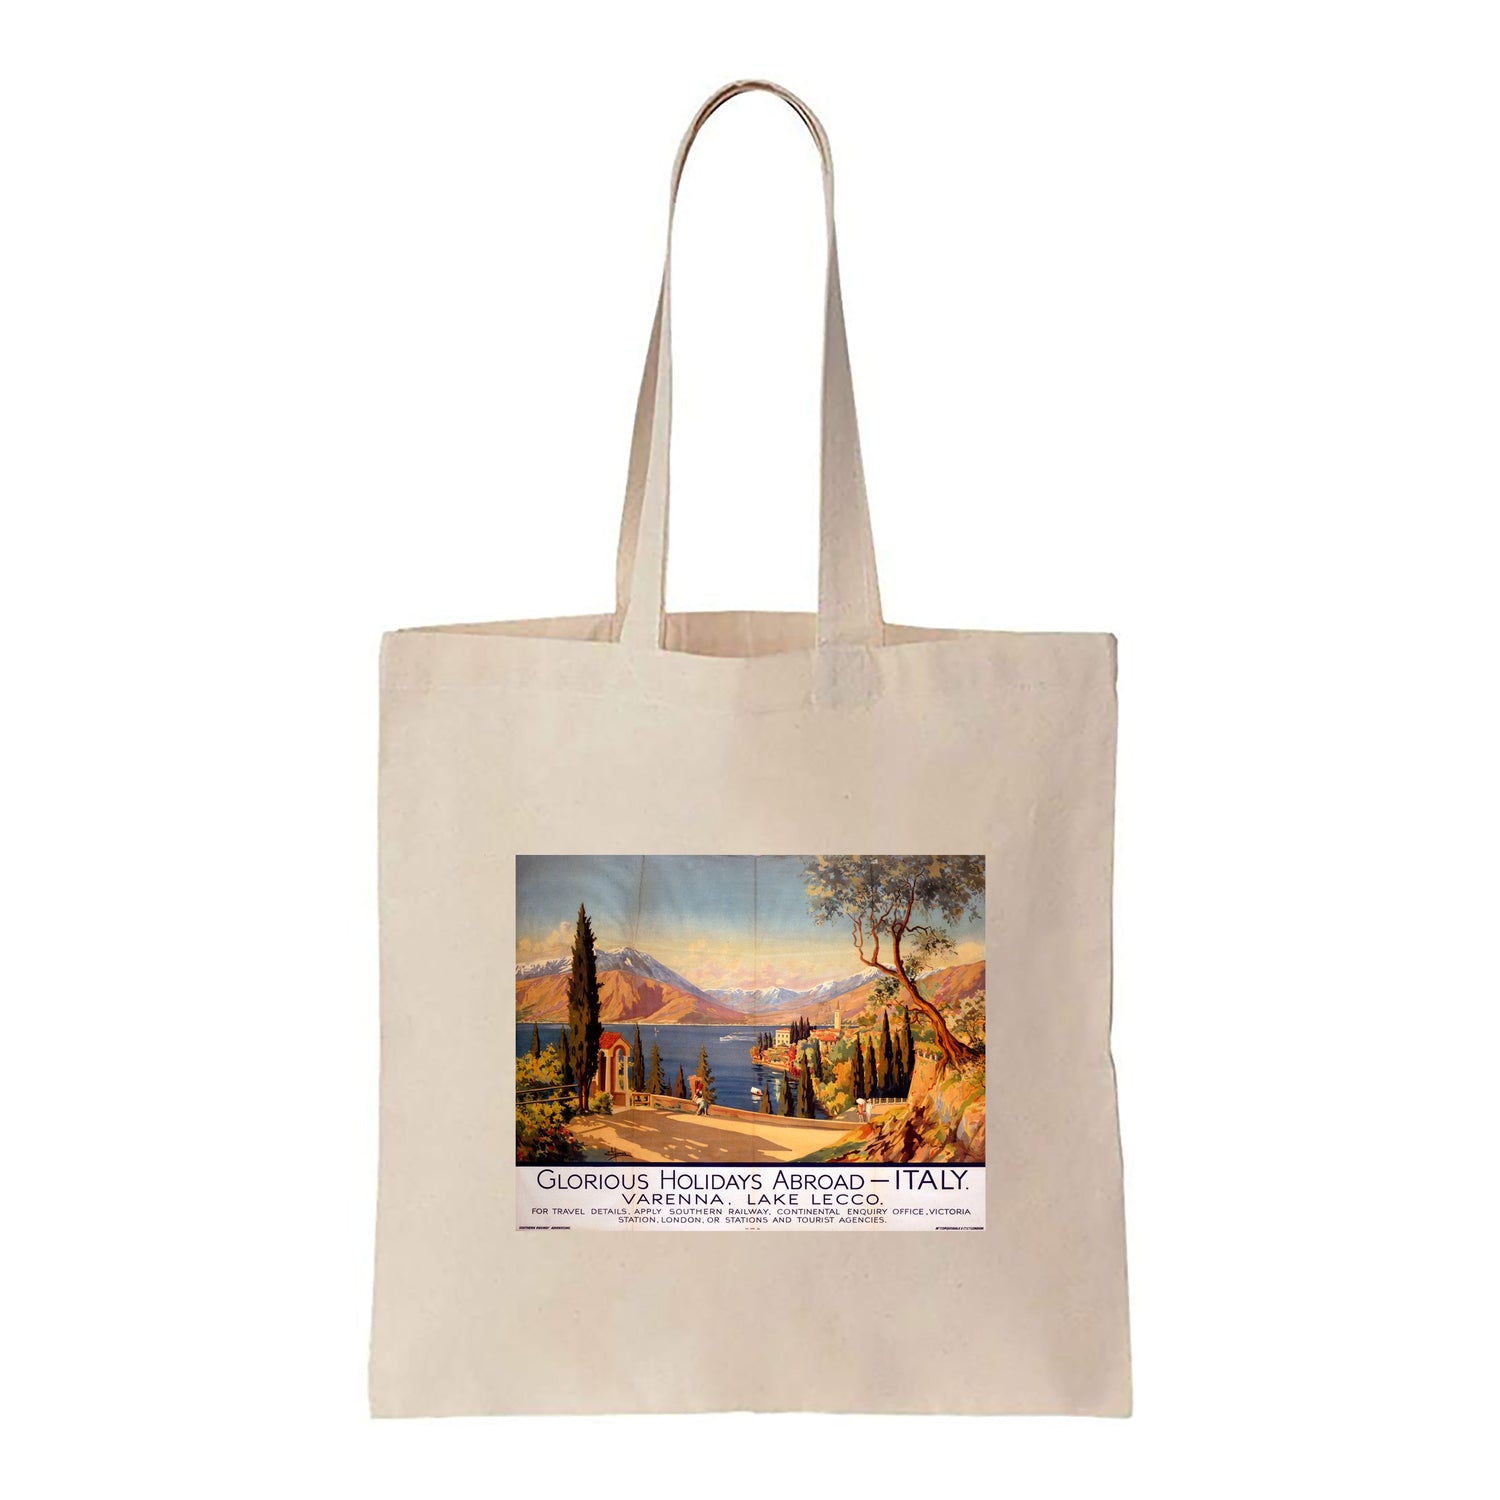 Italy Varenna Lake Lecco - Glorious Holidays Abroad - Canvas Tote Bag